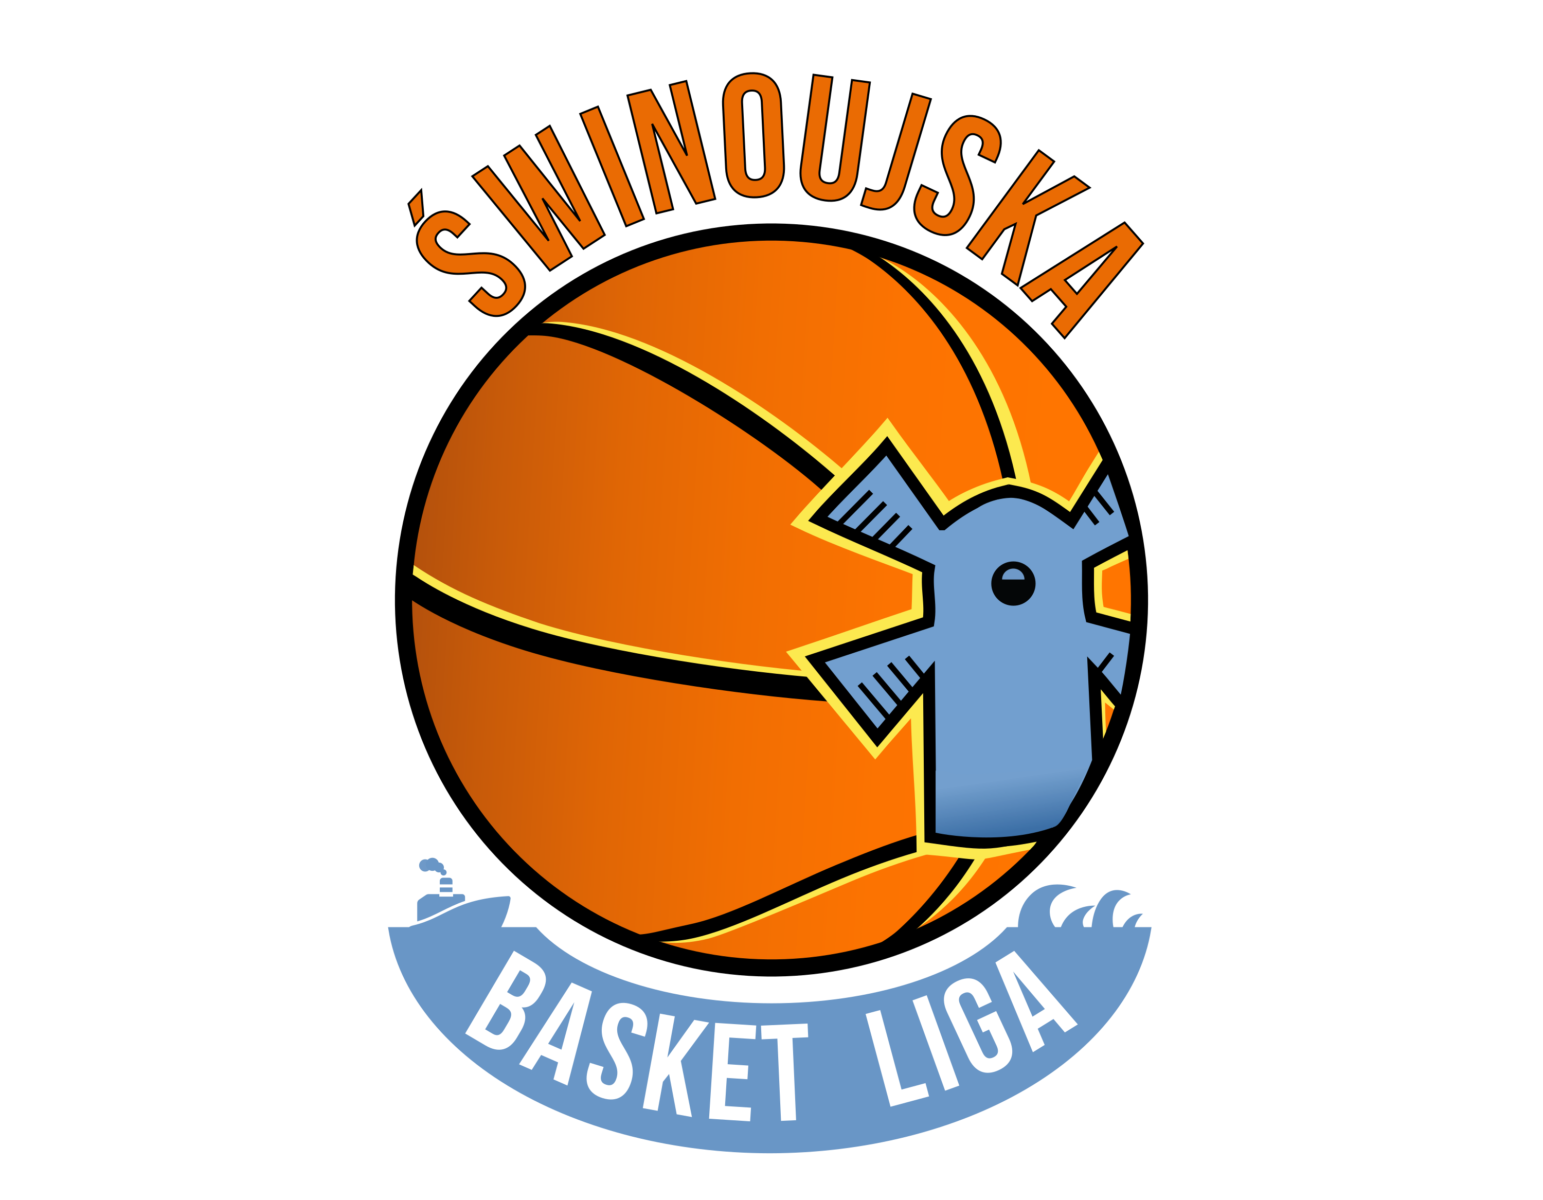 Superpuchar Świnoujskiej Basket Ligi